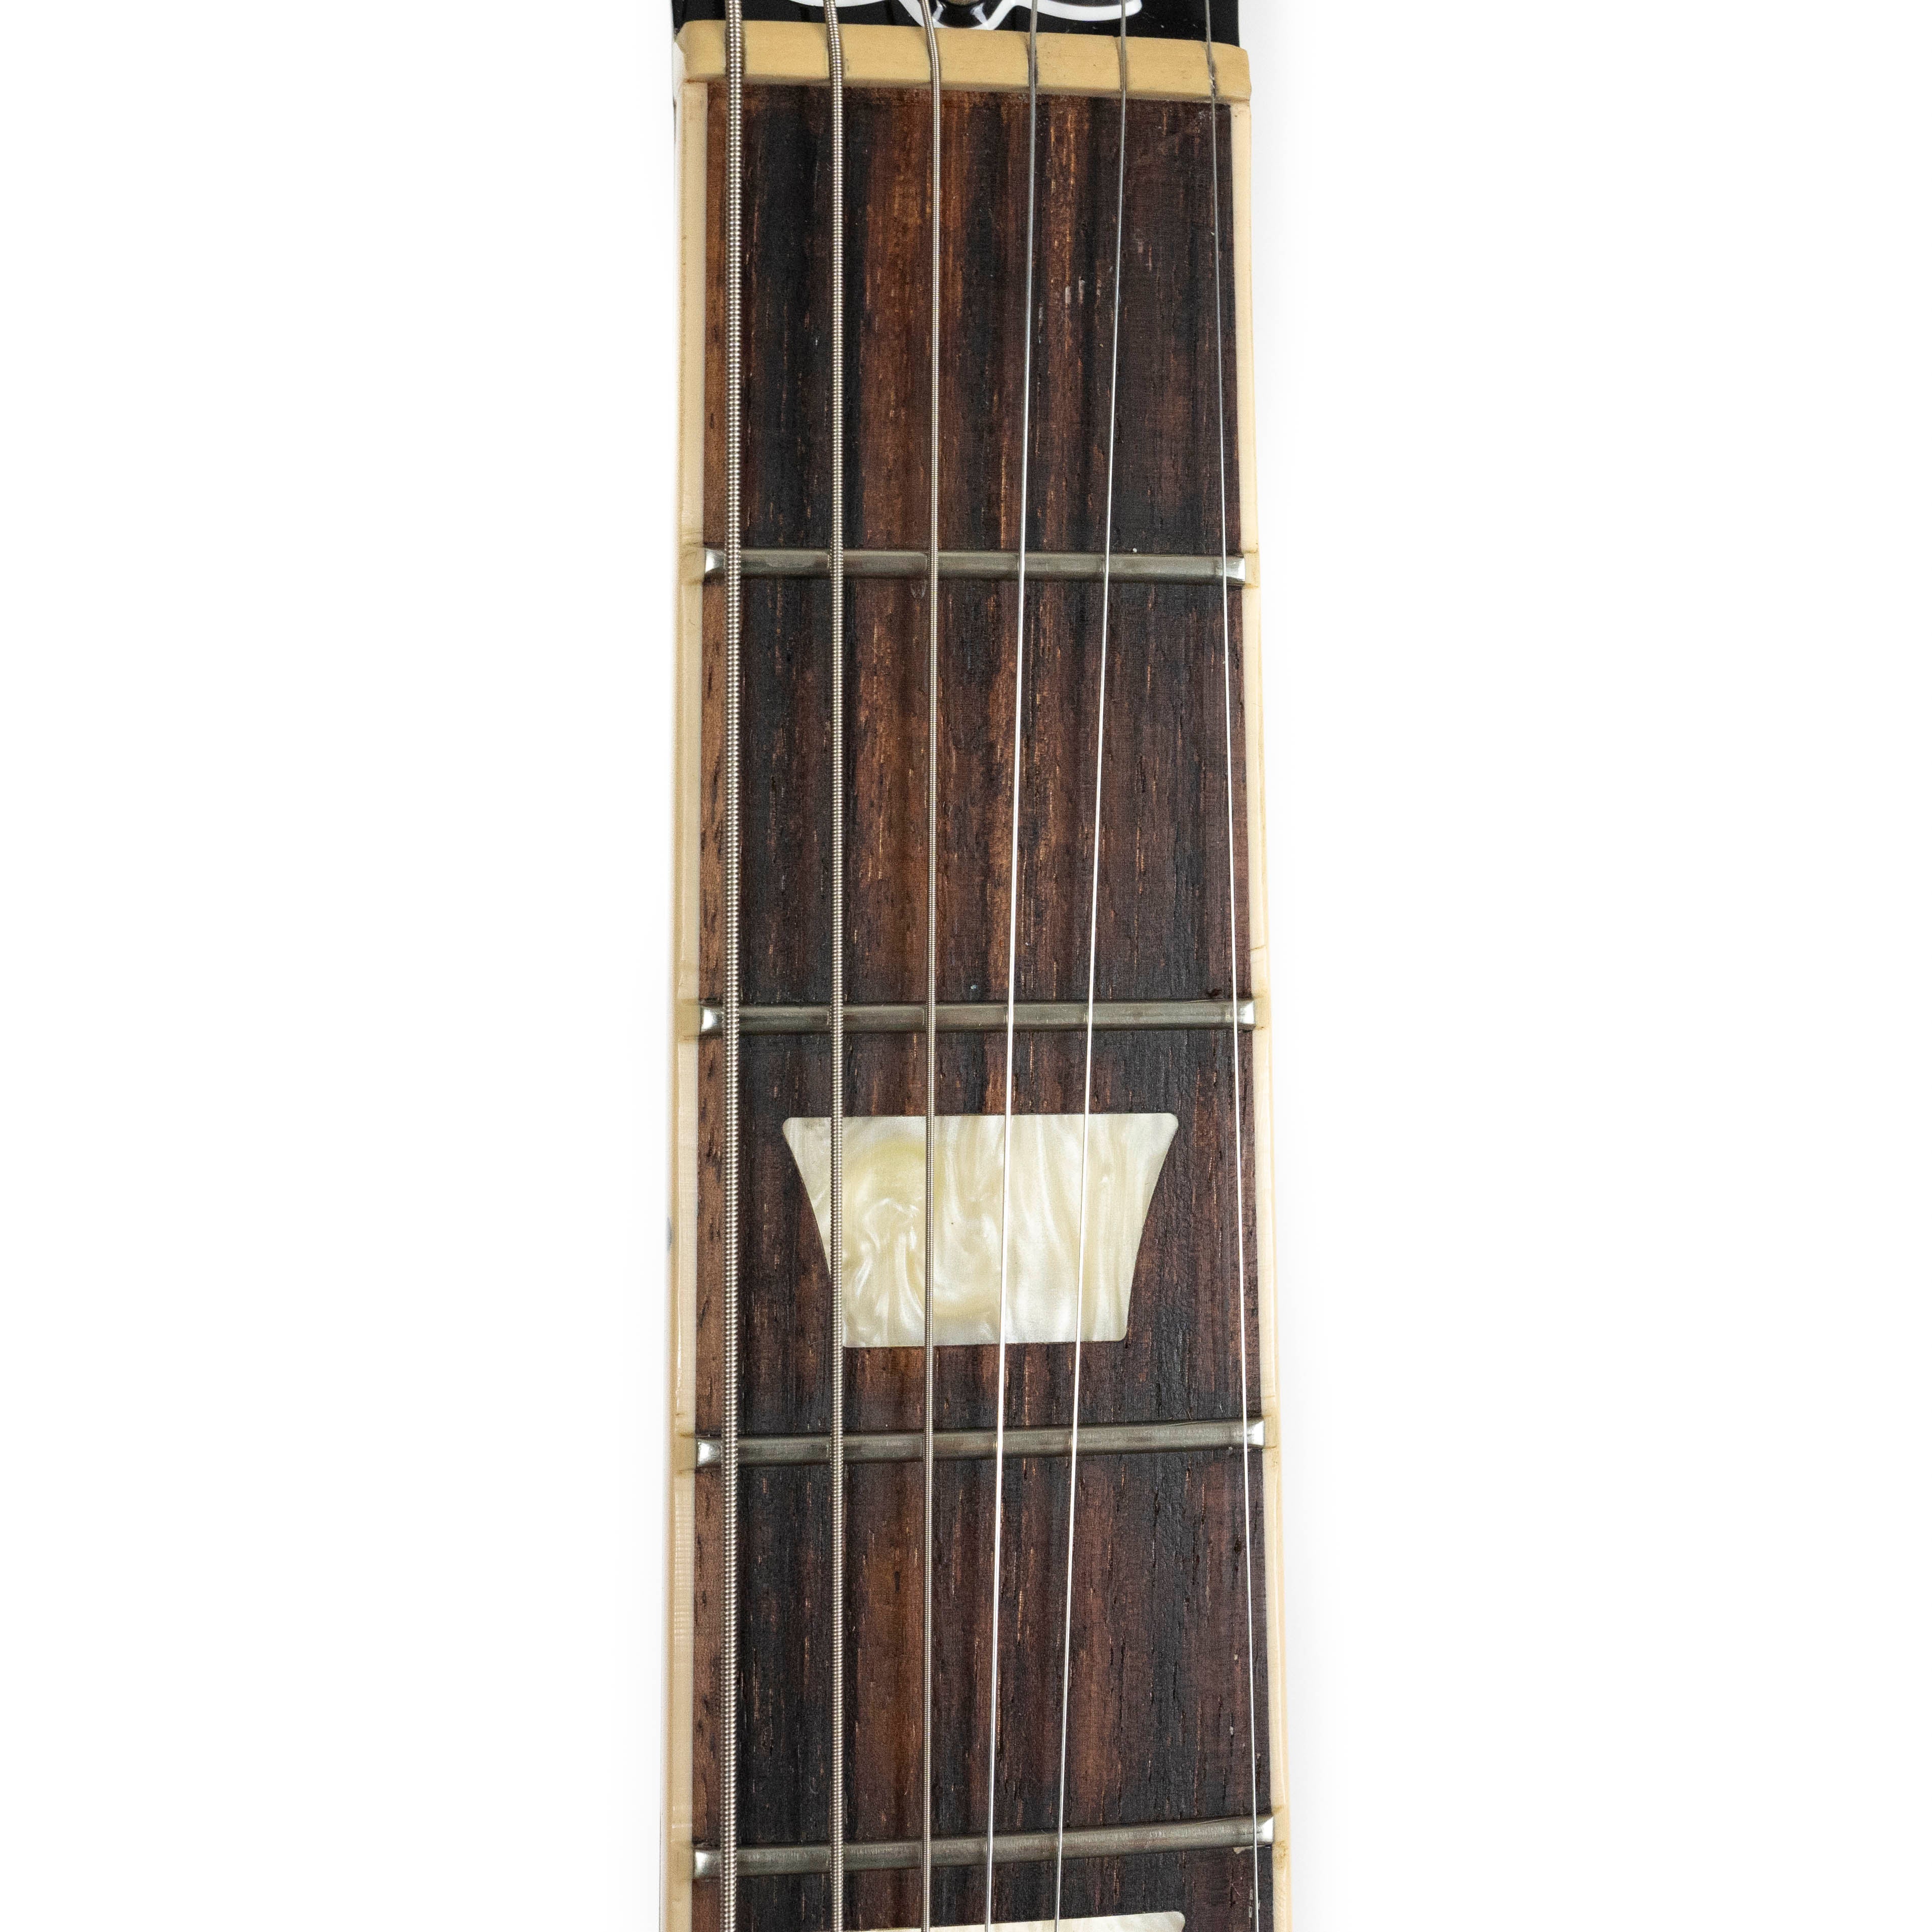 Gibson 2021 Les Paul Classic Ebony